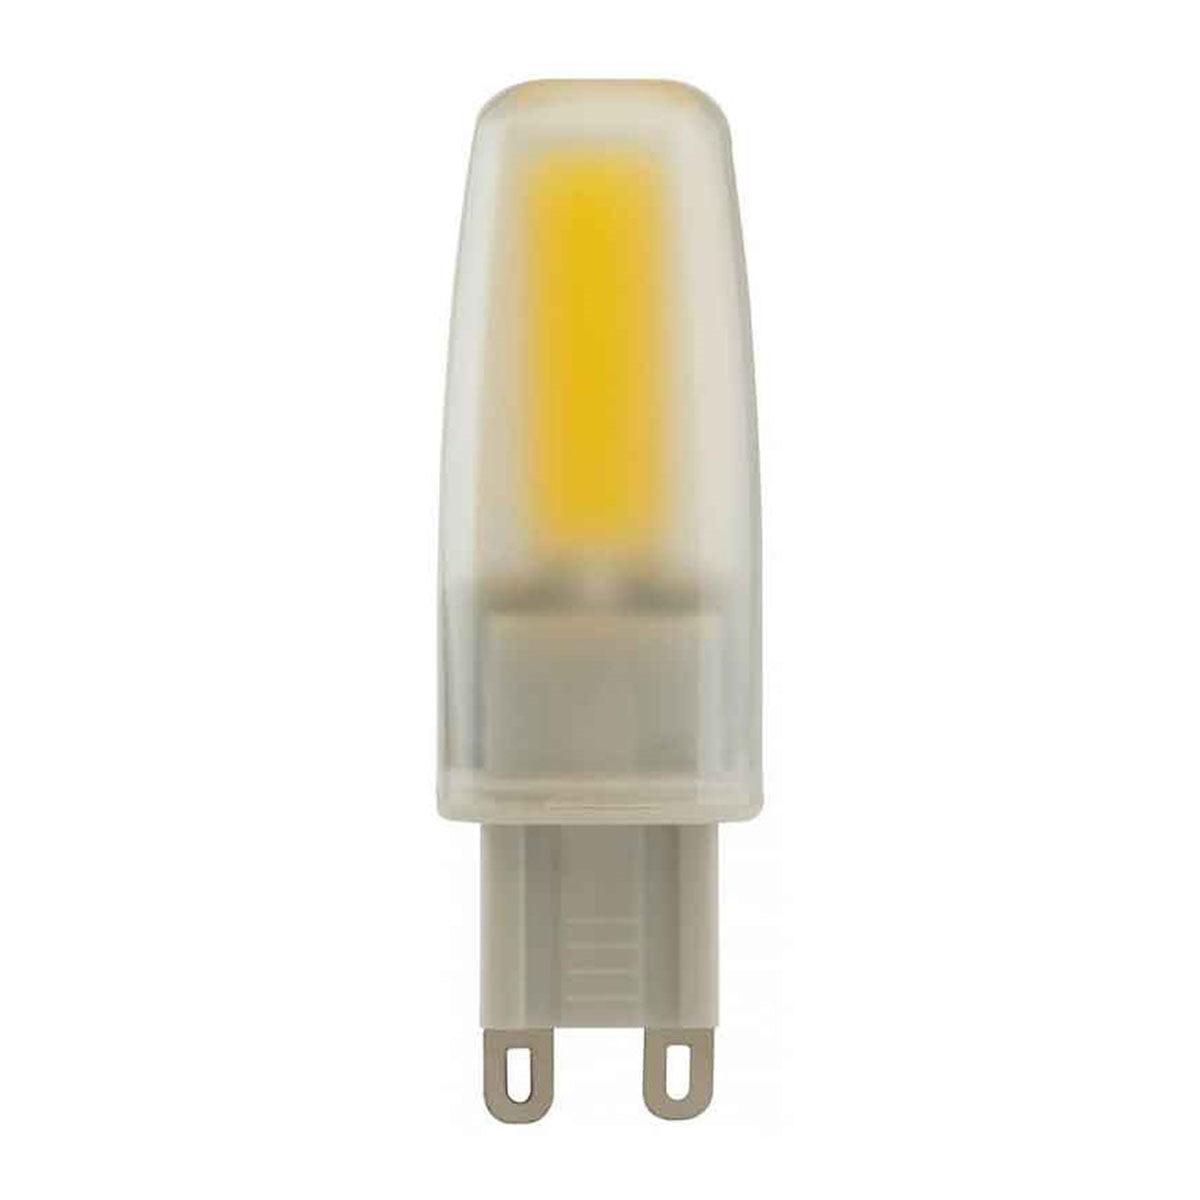 T4 Mini LED Bulb, 4 Watt, 460 Lumens, 5000K, G9 Base, Frosted Finish